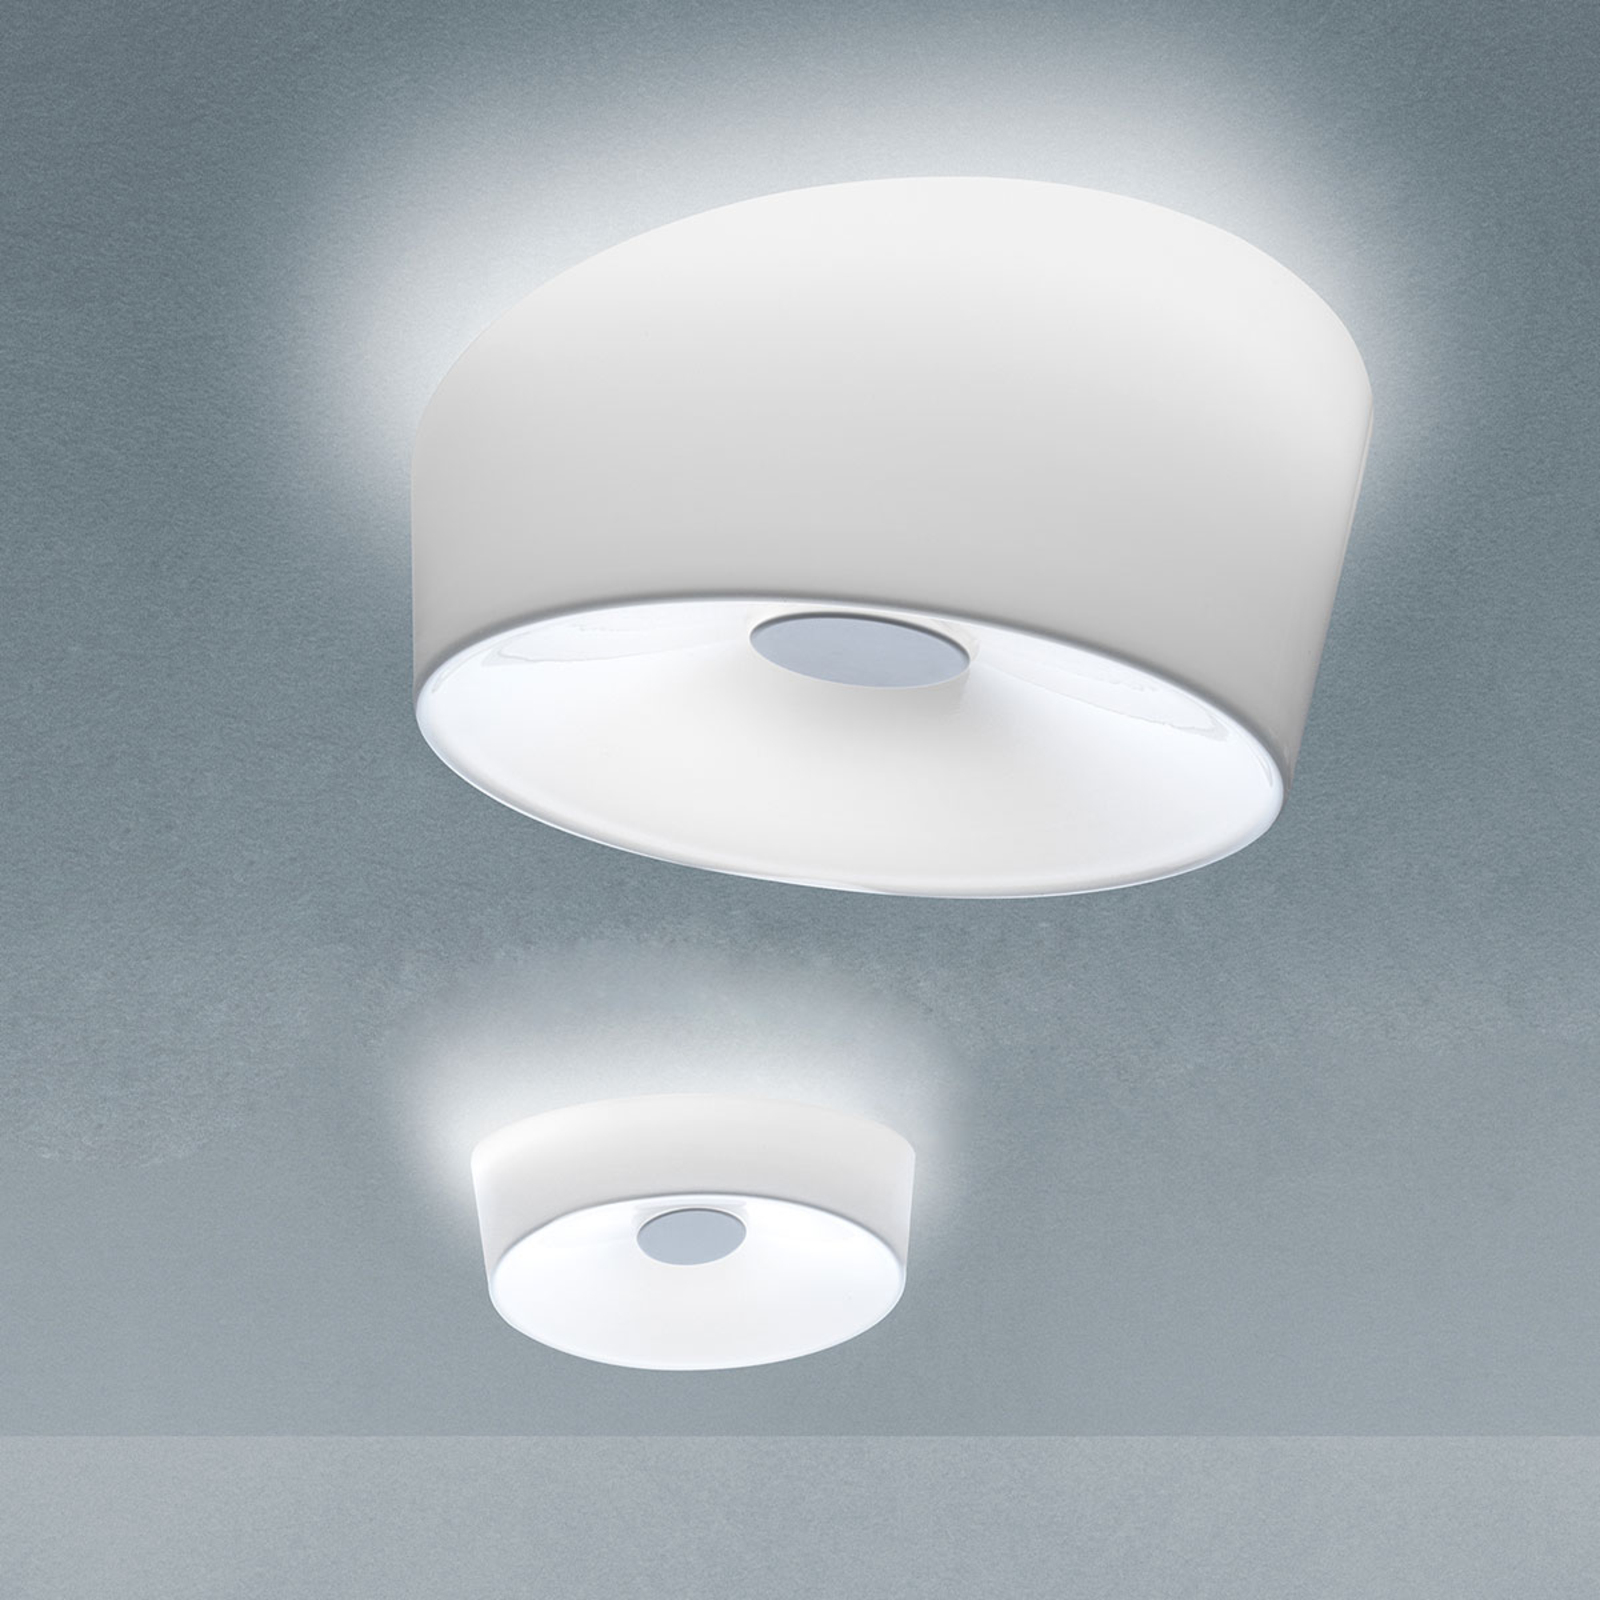 Foscarini Lumiere G9 ceiling light, Ø 34 cm, white